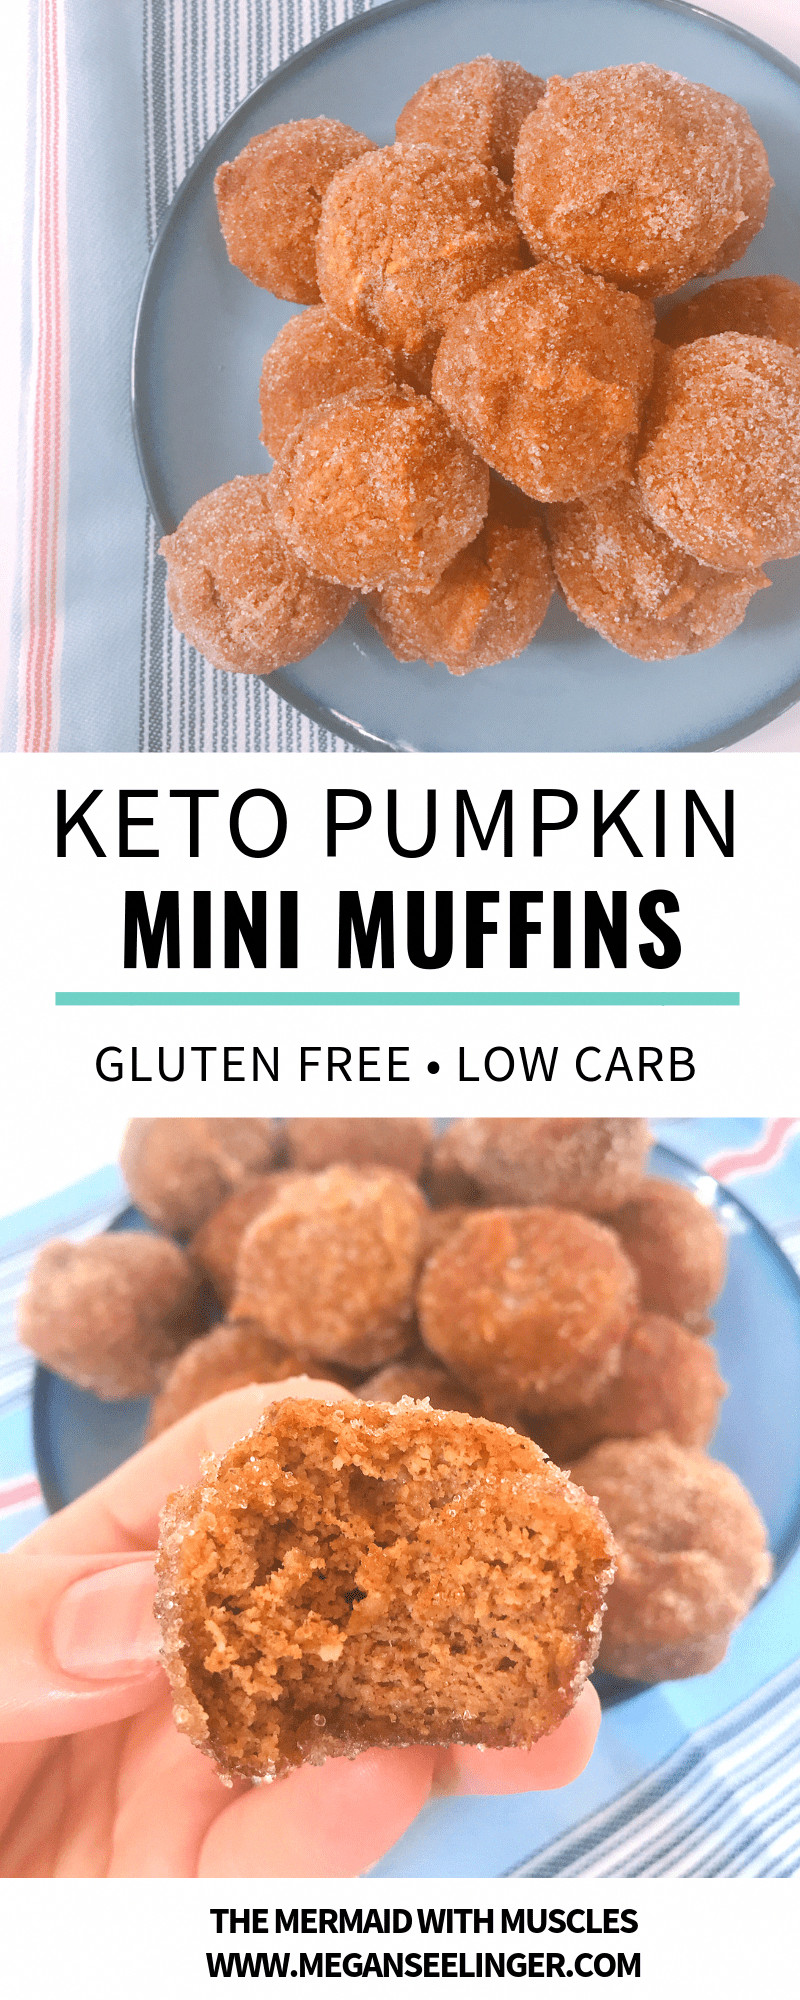 Pumpkin Keto Recipes Almond Flour
 keto pumpkin spice almond flour muffins in 2019